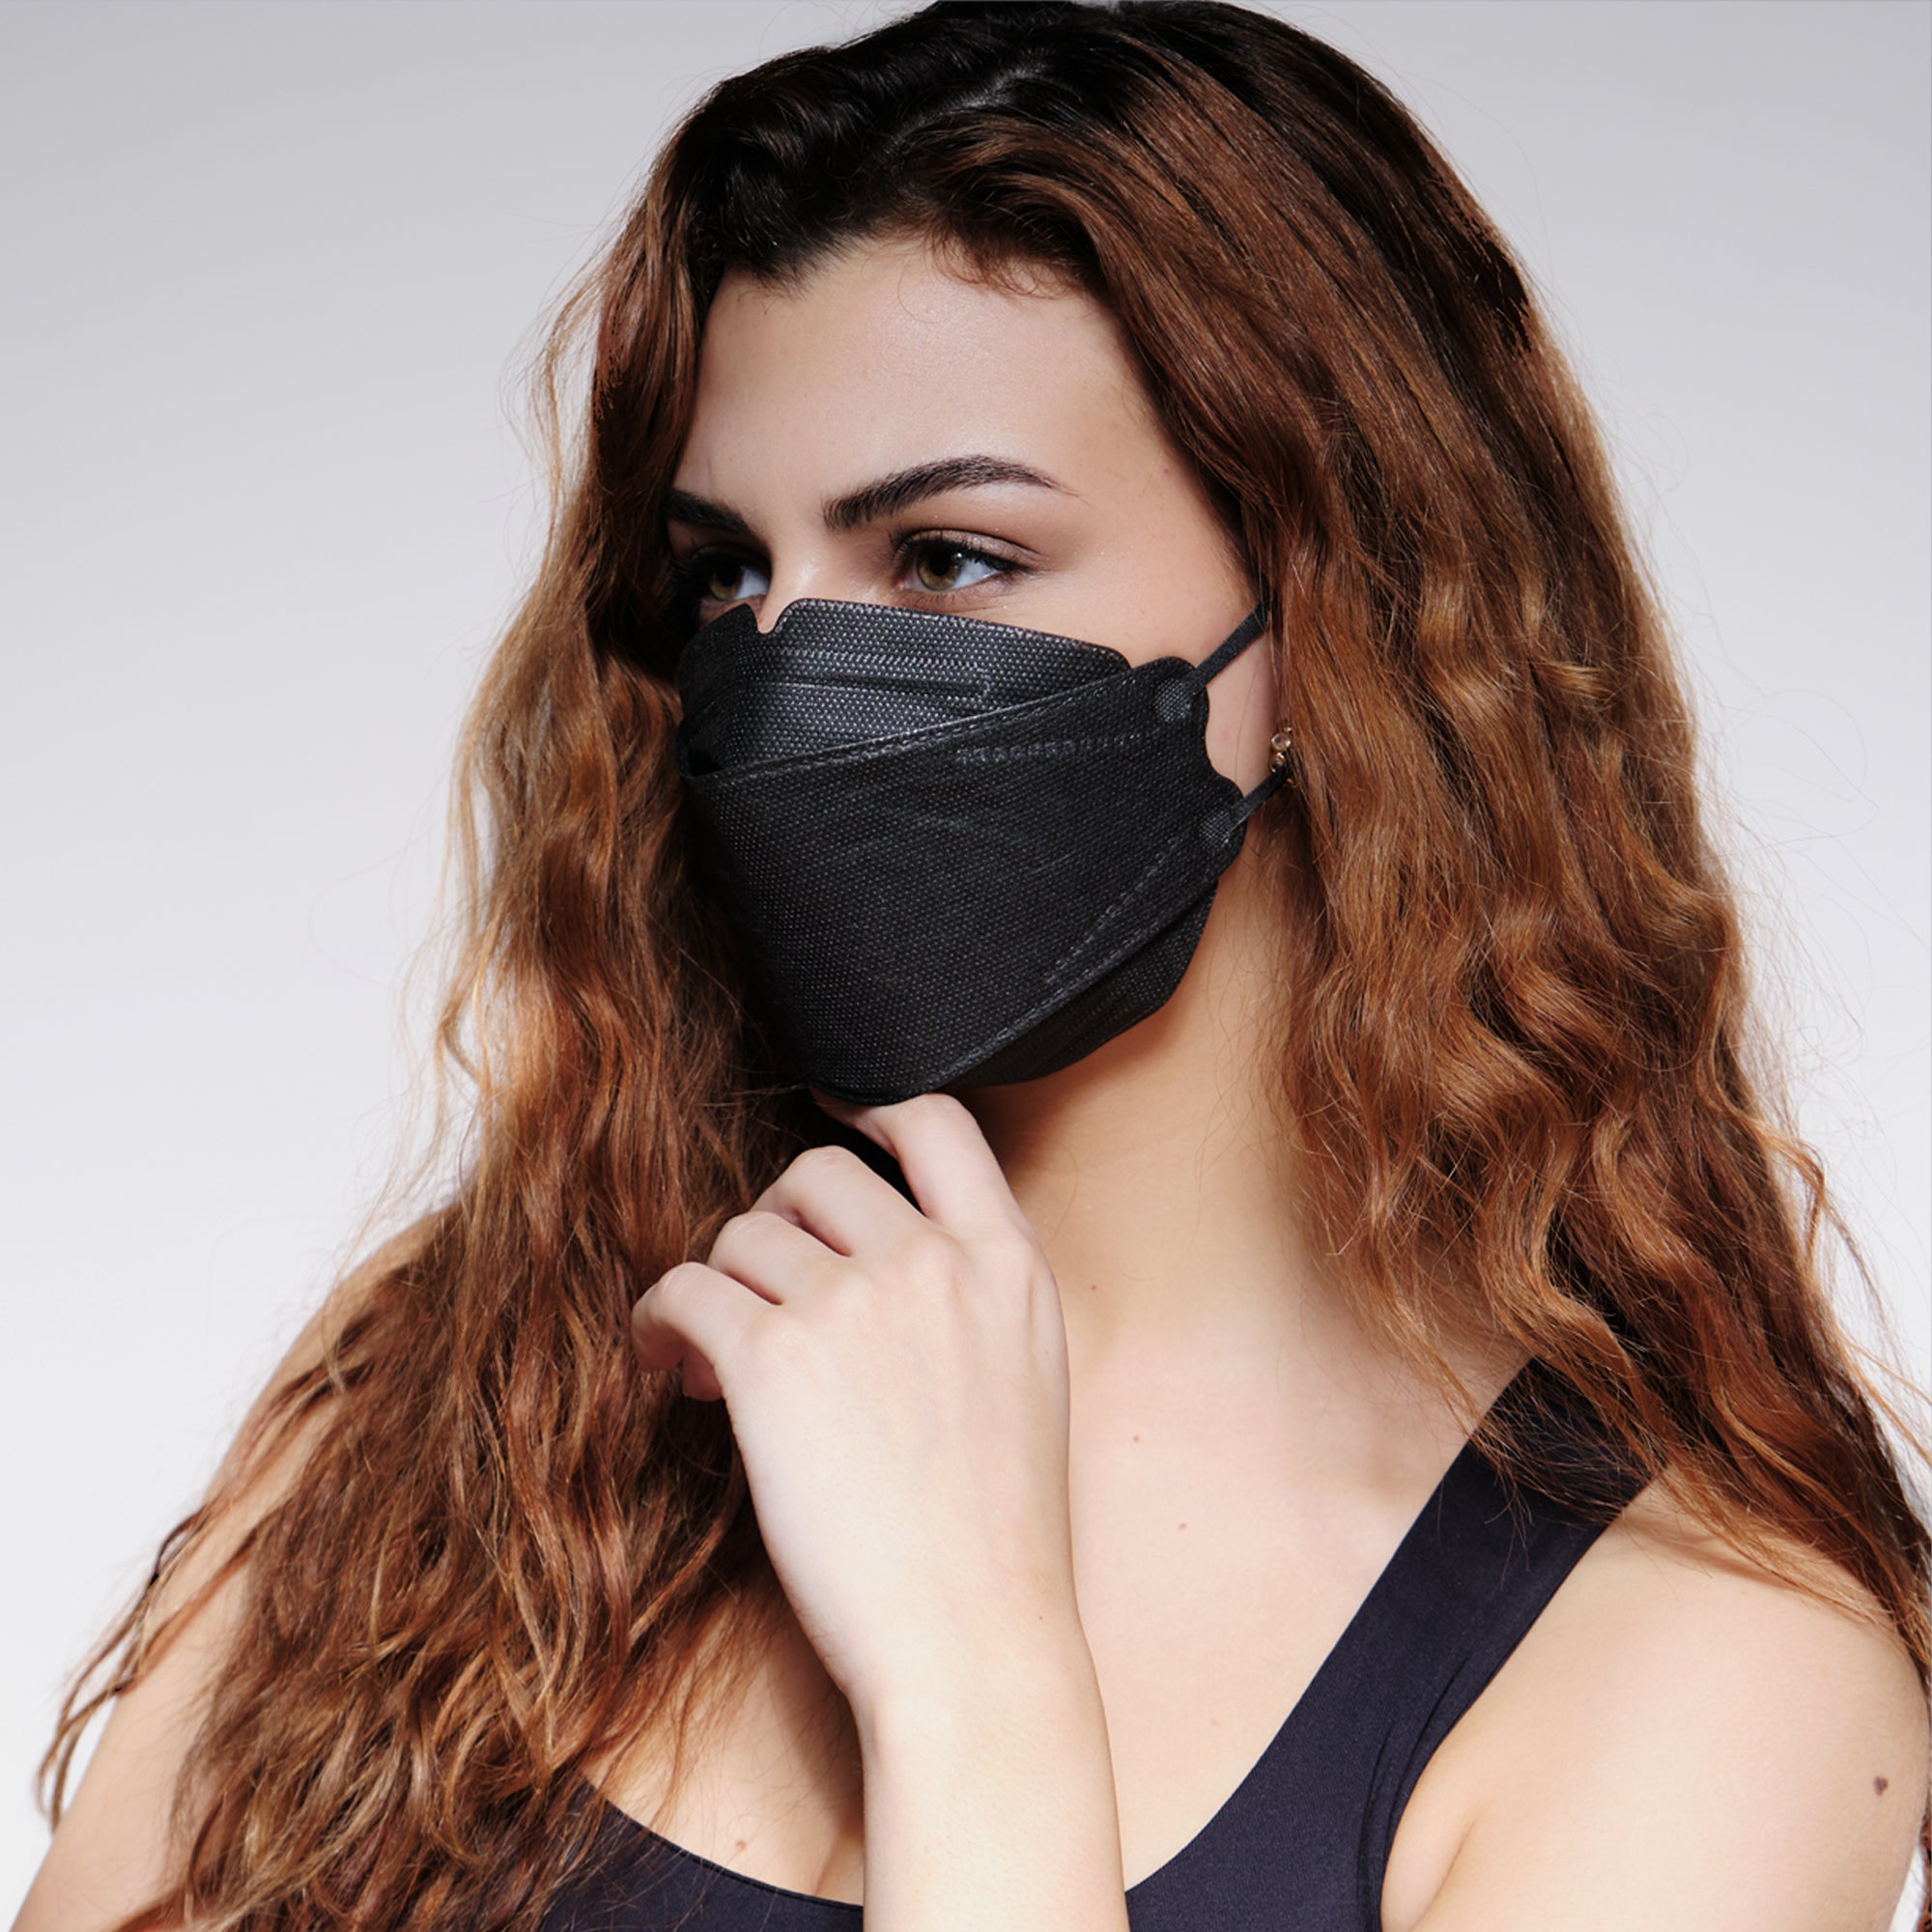 KN95 Respirator Face Mask - Black